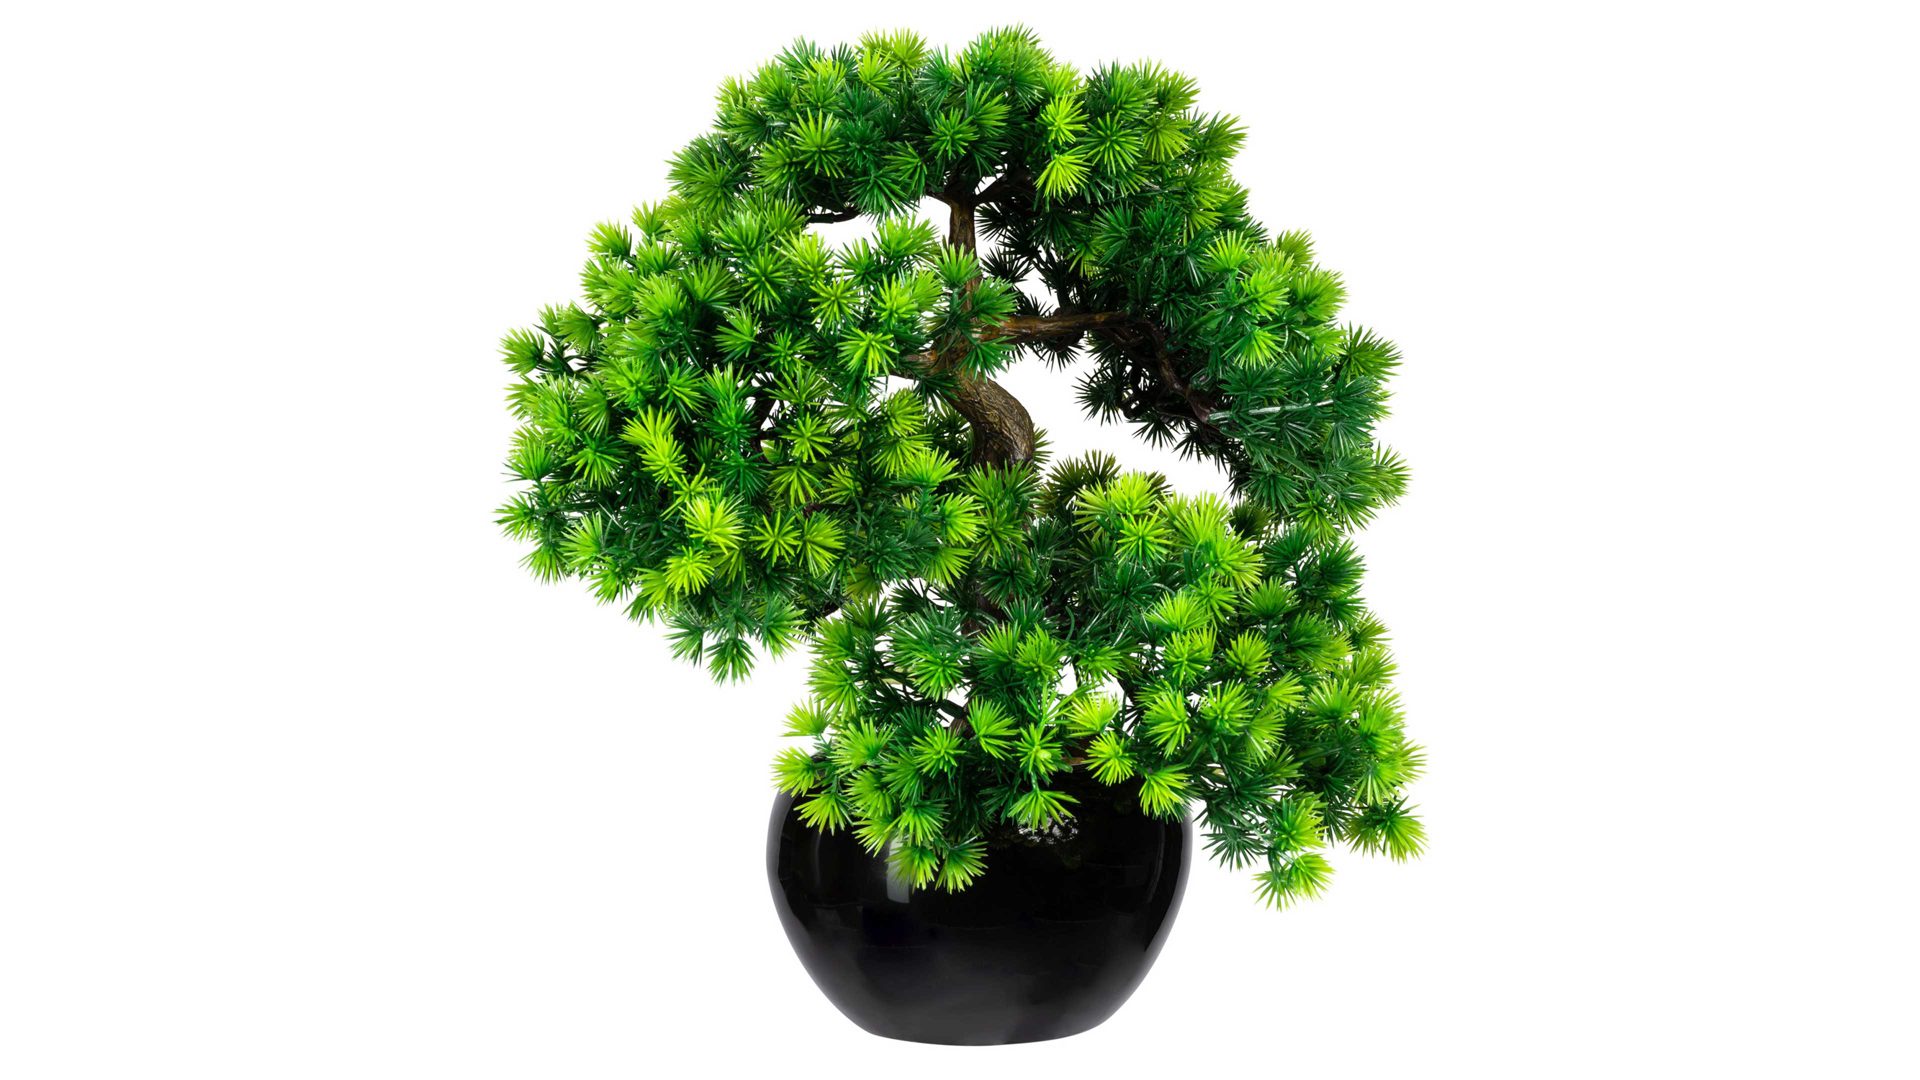 Pflanze Gasper aus Kunststoff in Grün Bonsai Lärche grüner Kunststoff & schwarzer Keramiktopf – Höhe ca. 37 cm